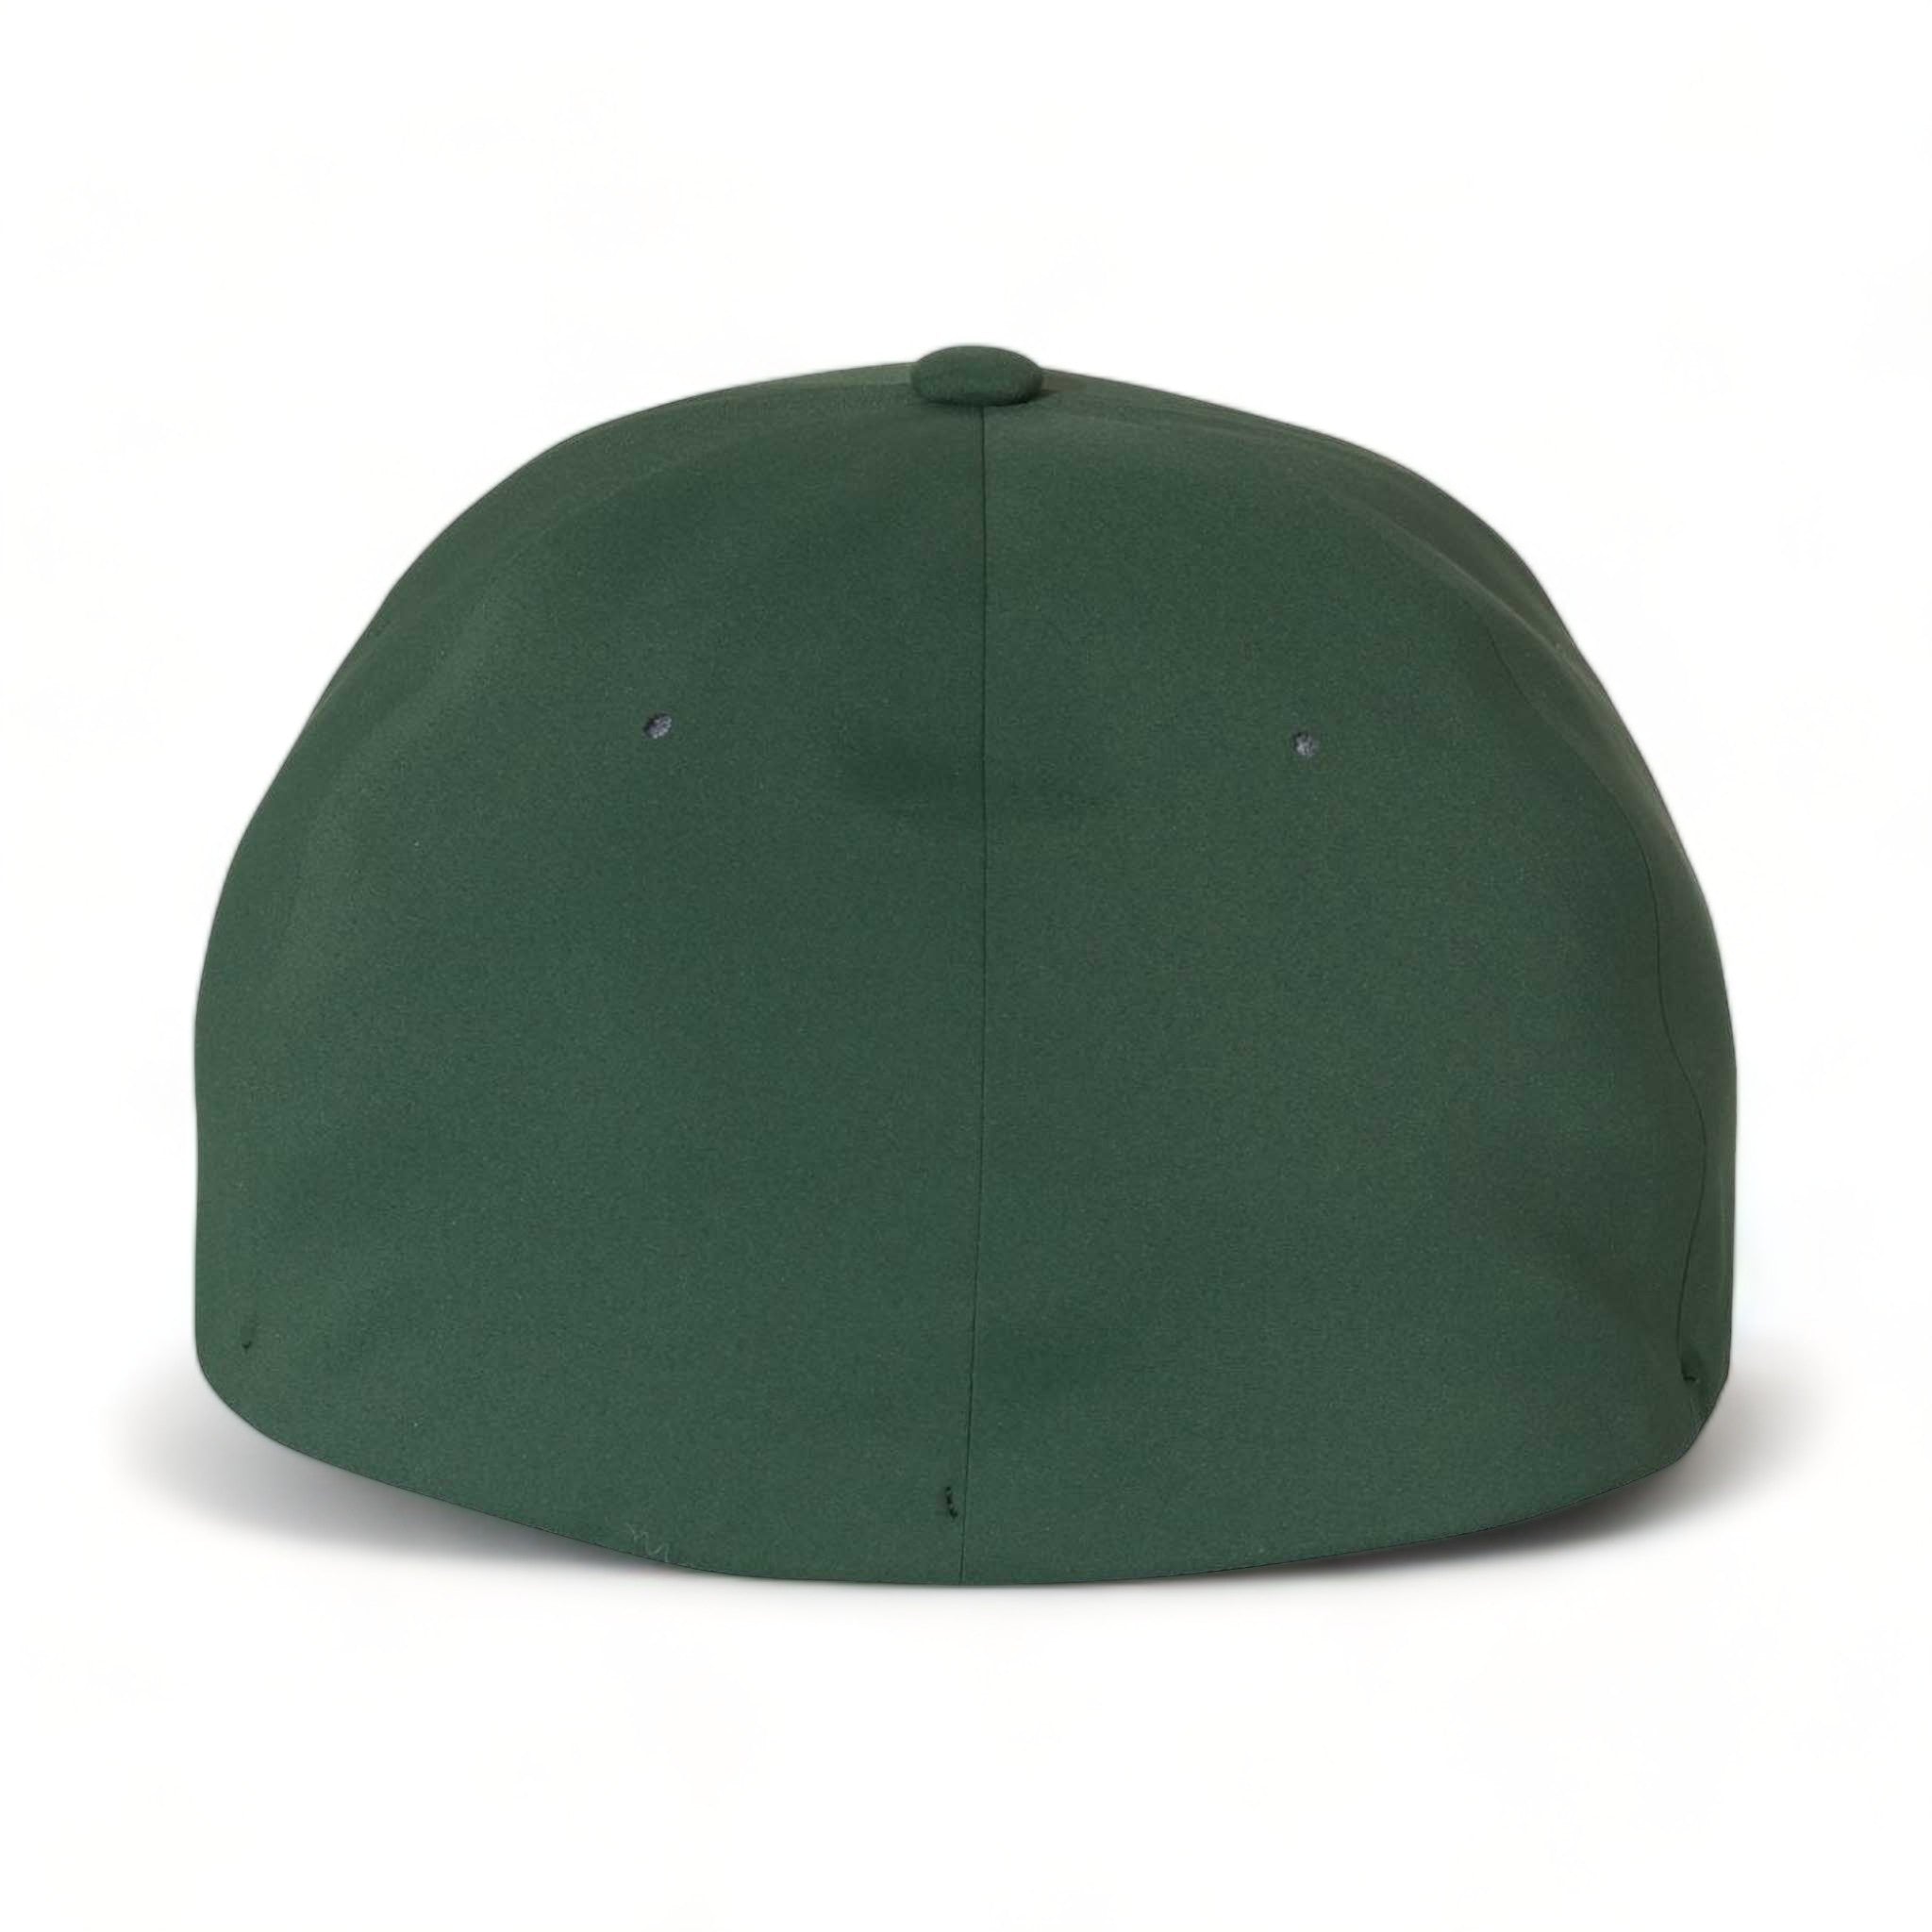 Back view of Flexfit 180 custom hat in spruce